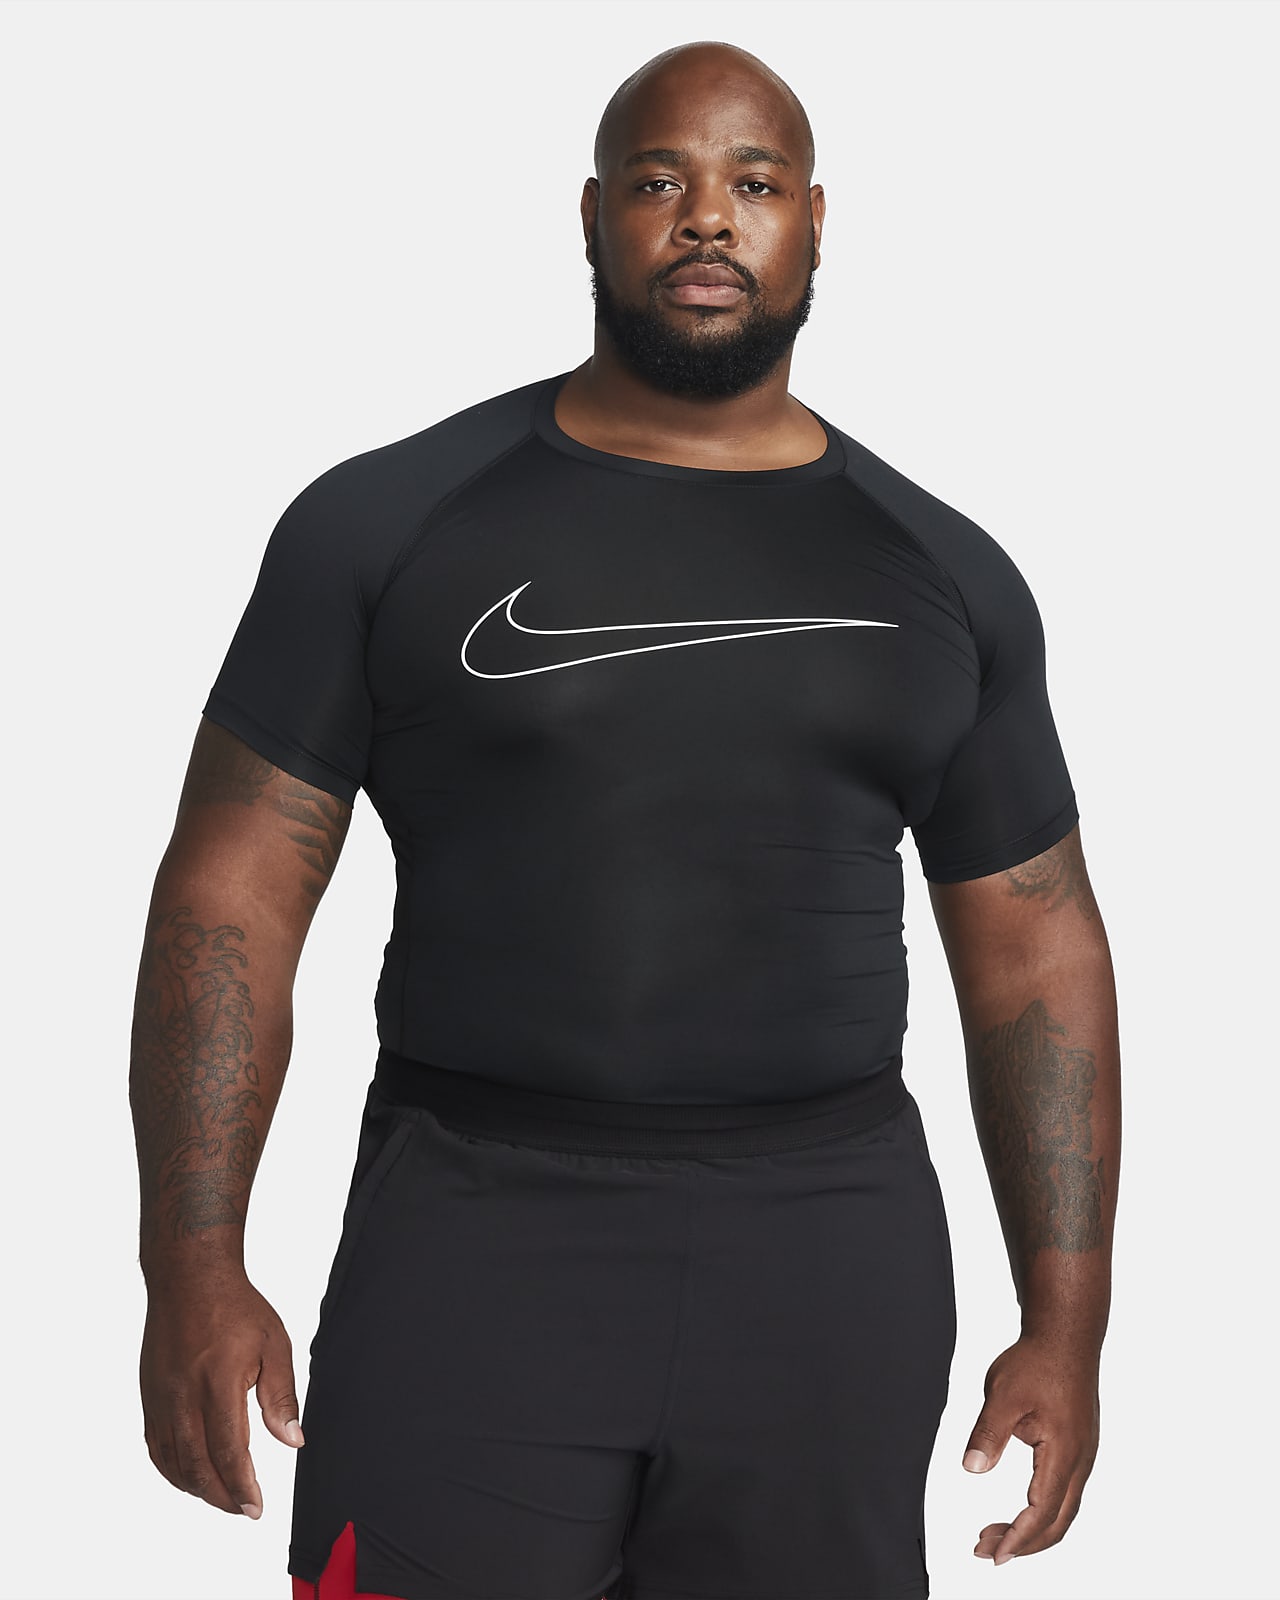 Ocupar rosado Encommium Nike Pro Dri-FIT Men's Tight Fit Short-Sleeve Top. Nike.com